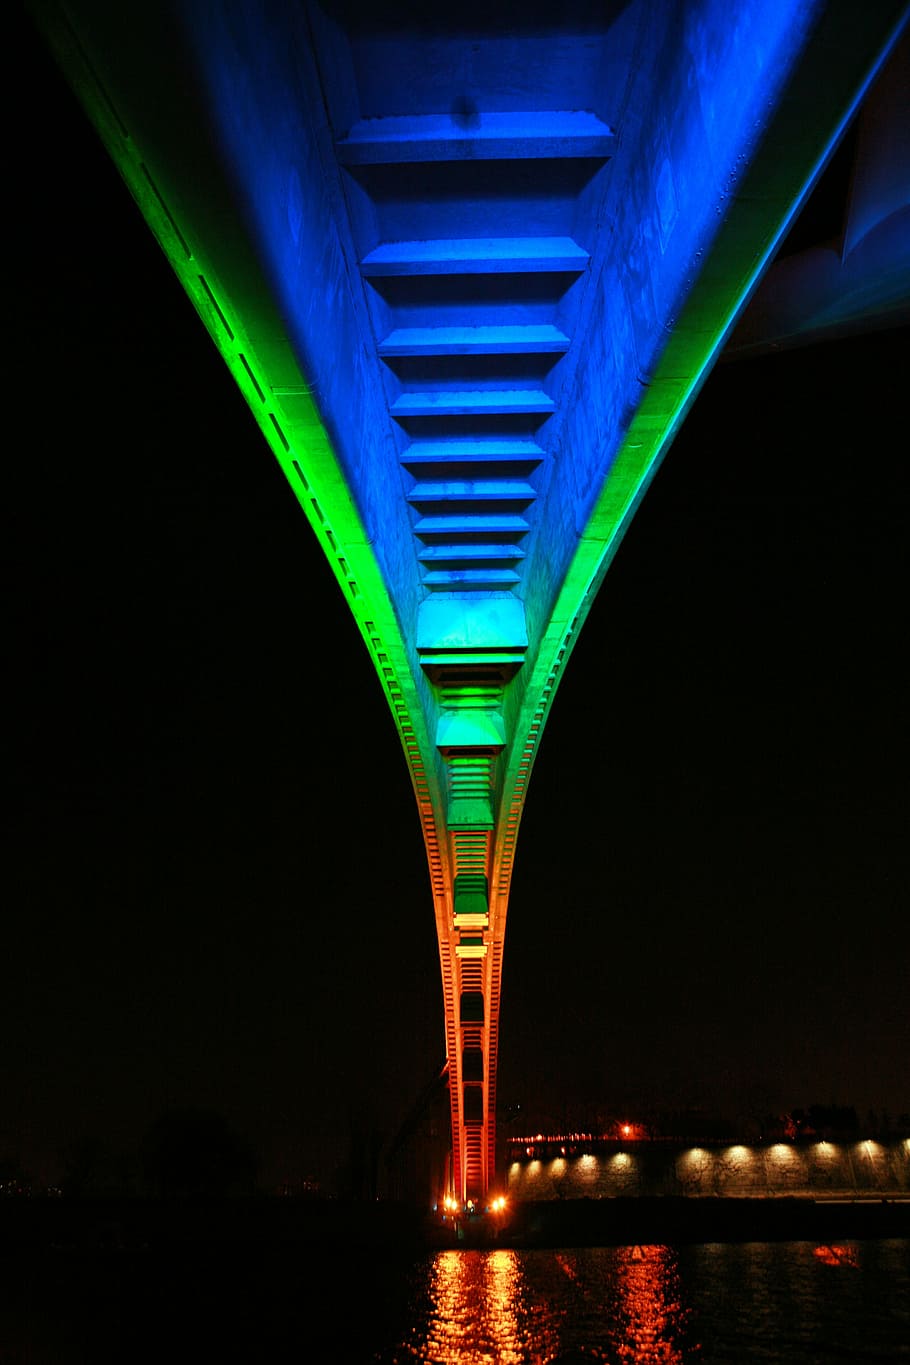 jembatan, pemandangan malam, pemandangan malam seoul, sungai han, republik korea, korea, malam, air, diterangi, arsitektur